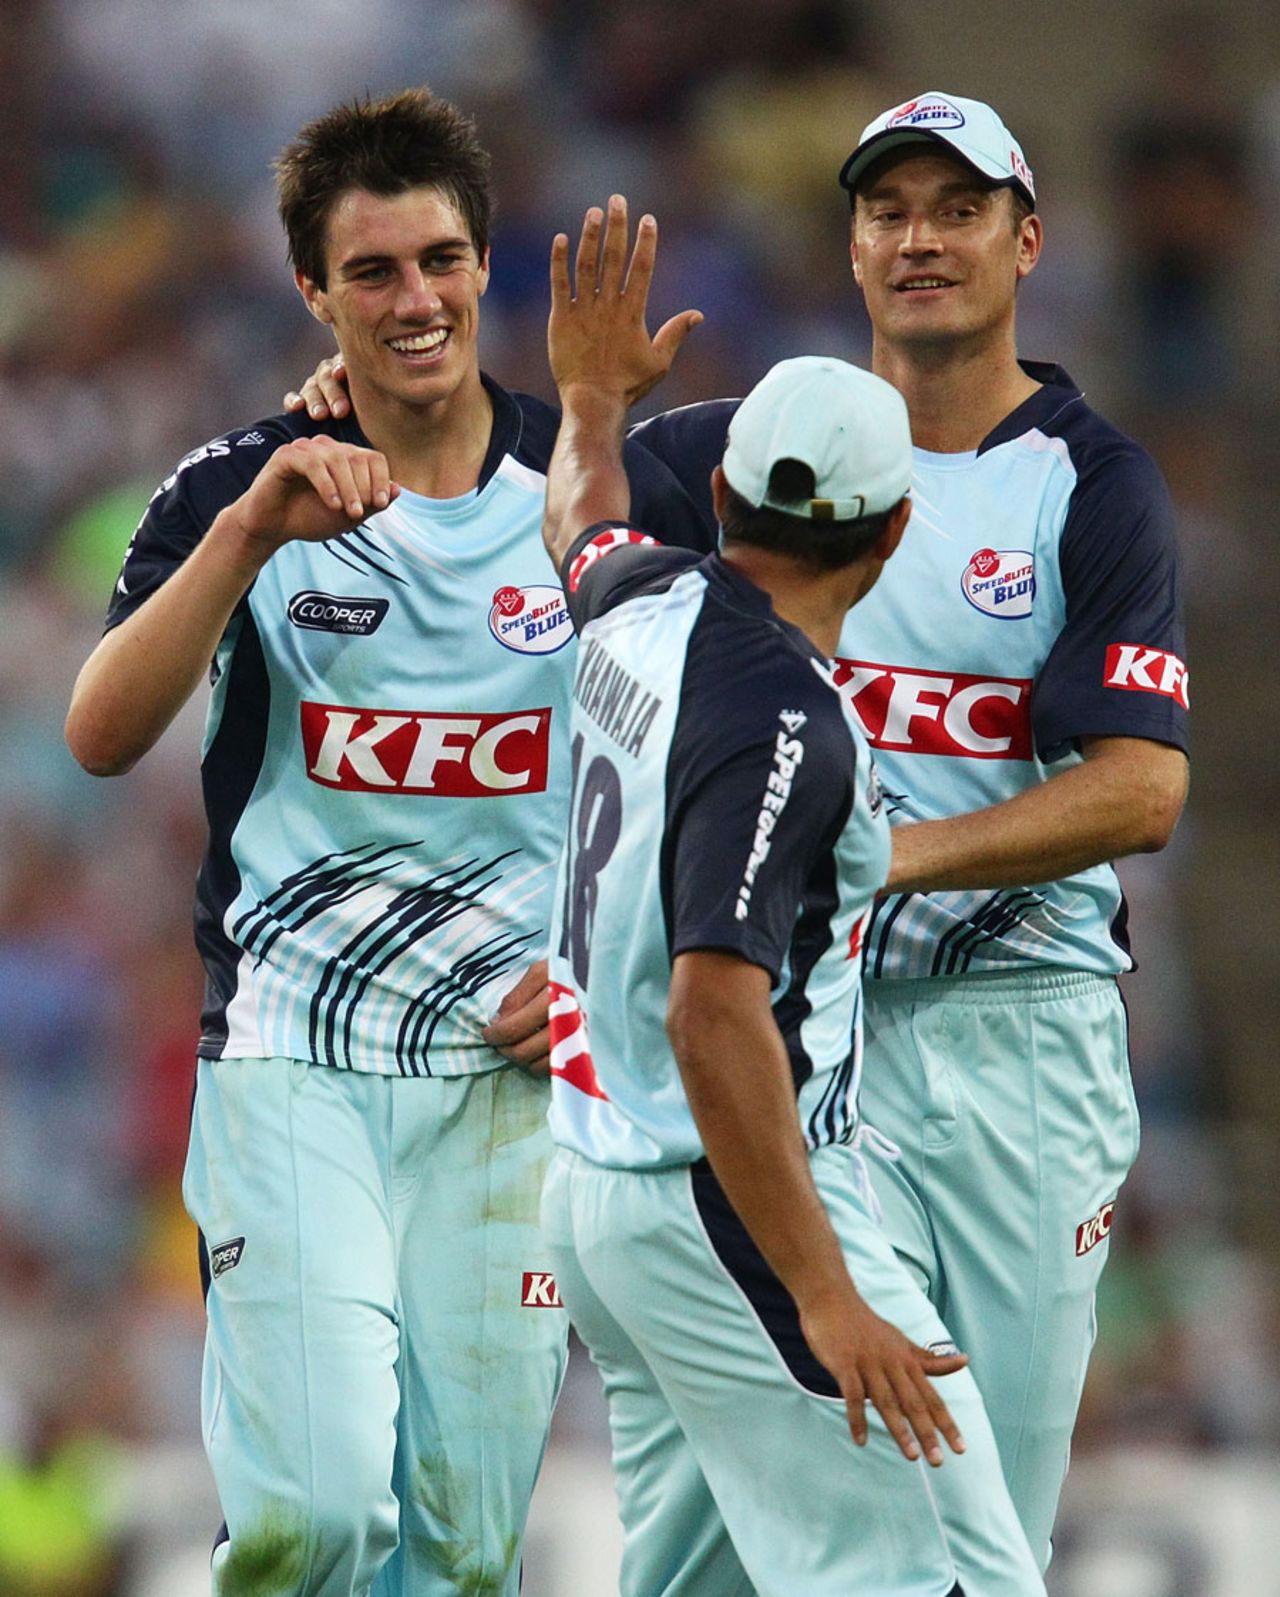 Patrick Cummins is congratulated on getting the wicket of Travis Birt, New South Wales v Tasmania, Twenty20 Big Bash 2010-11, Sydney, January 19, 2011